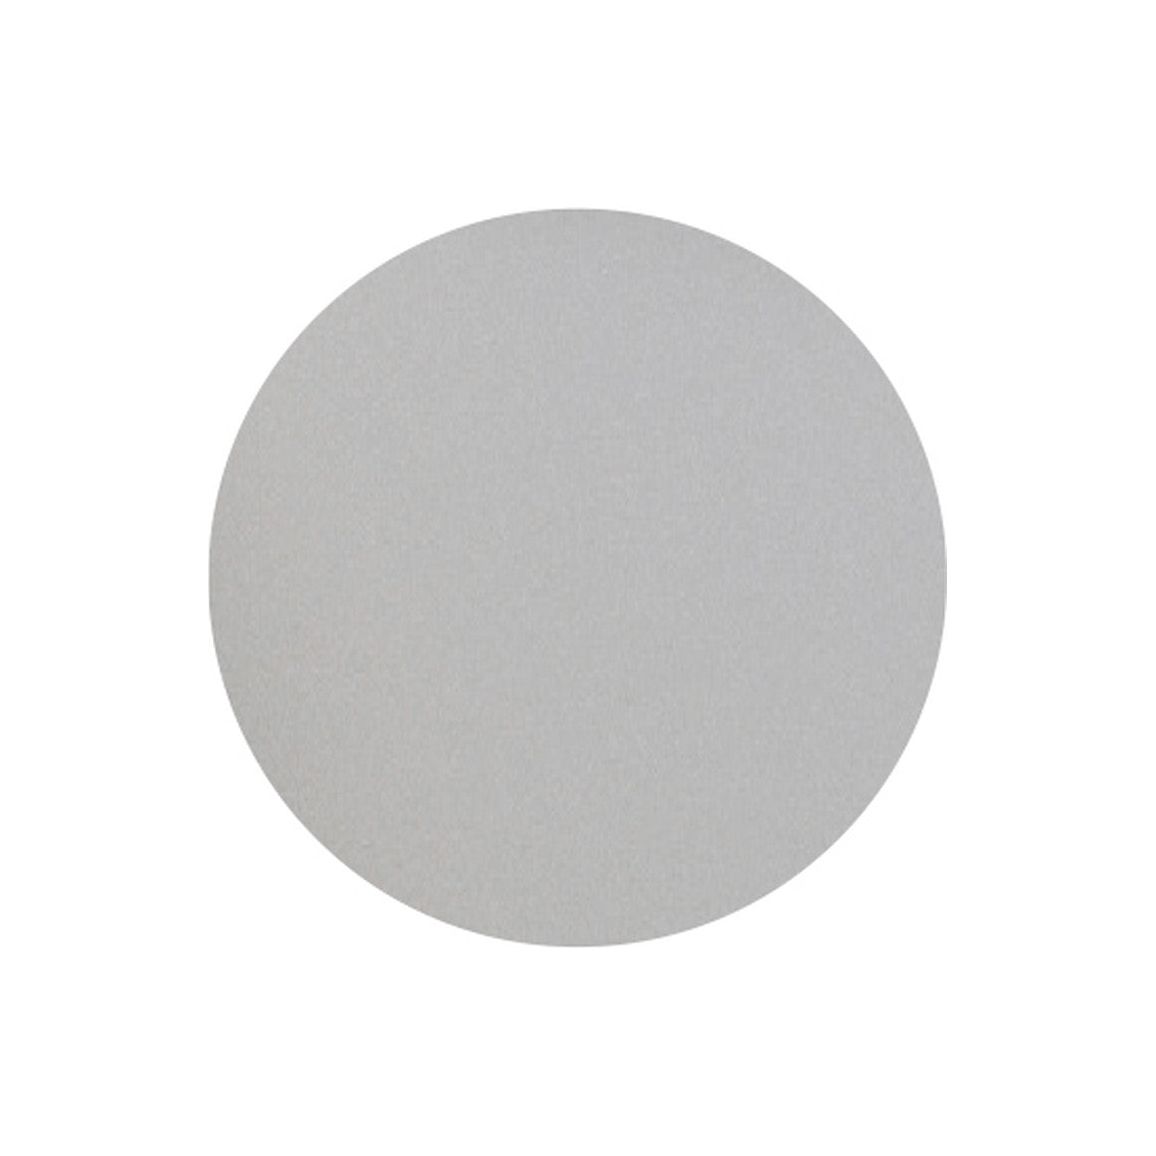 Cedar 500mm Mirrored Unit - Light Grey Gloss